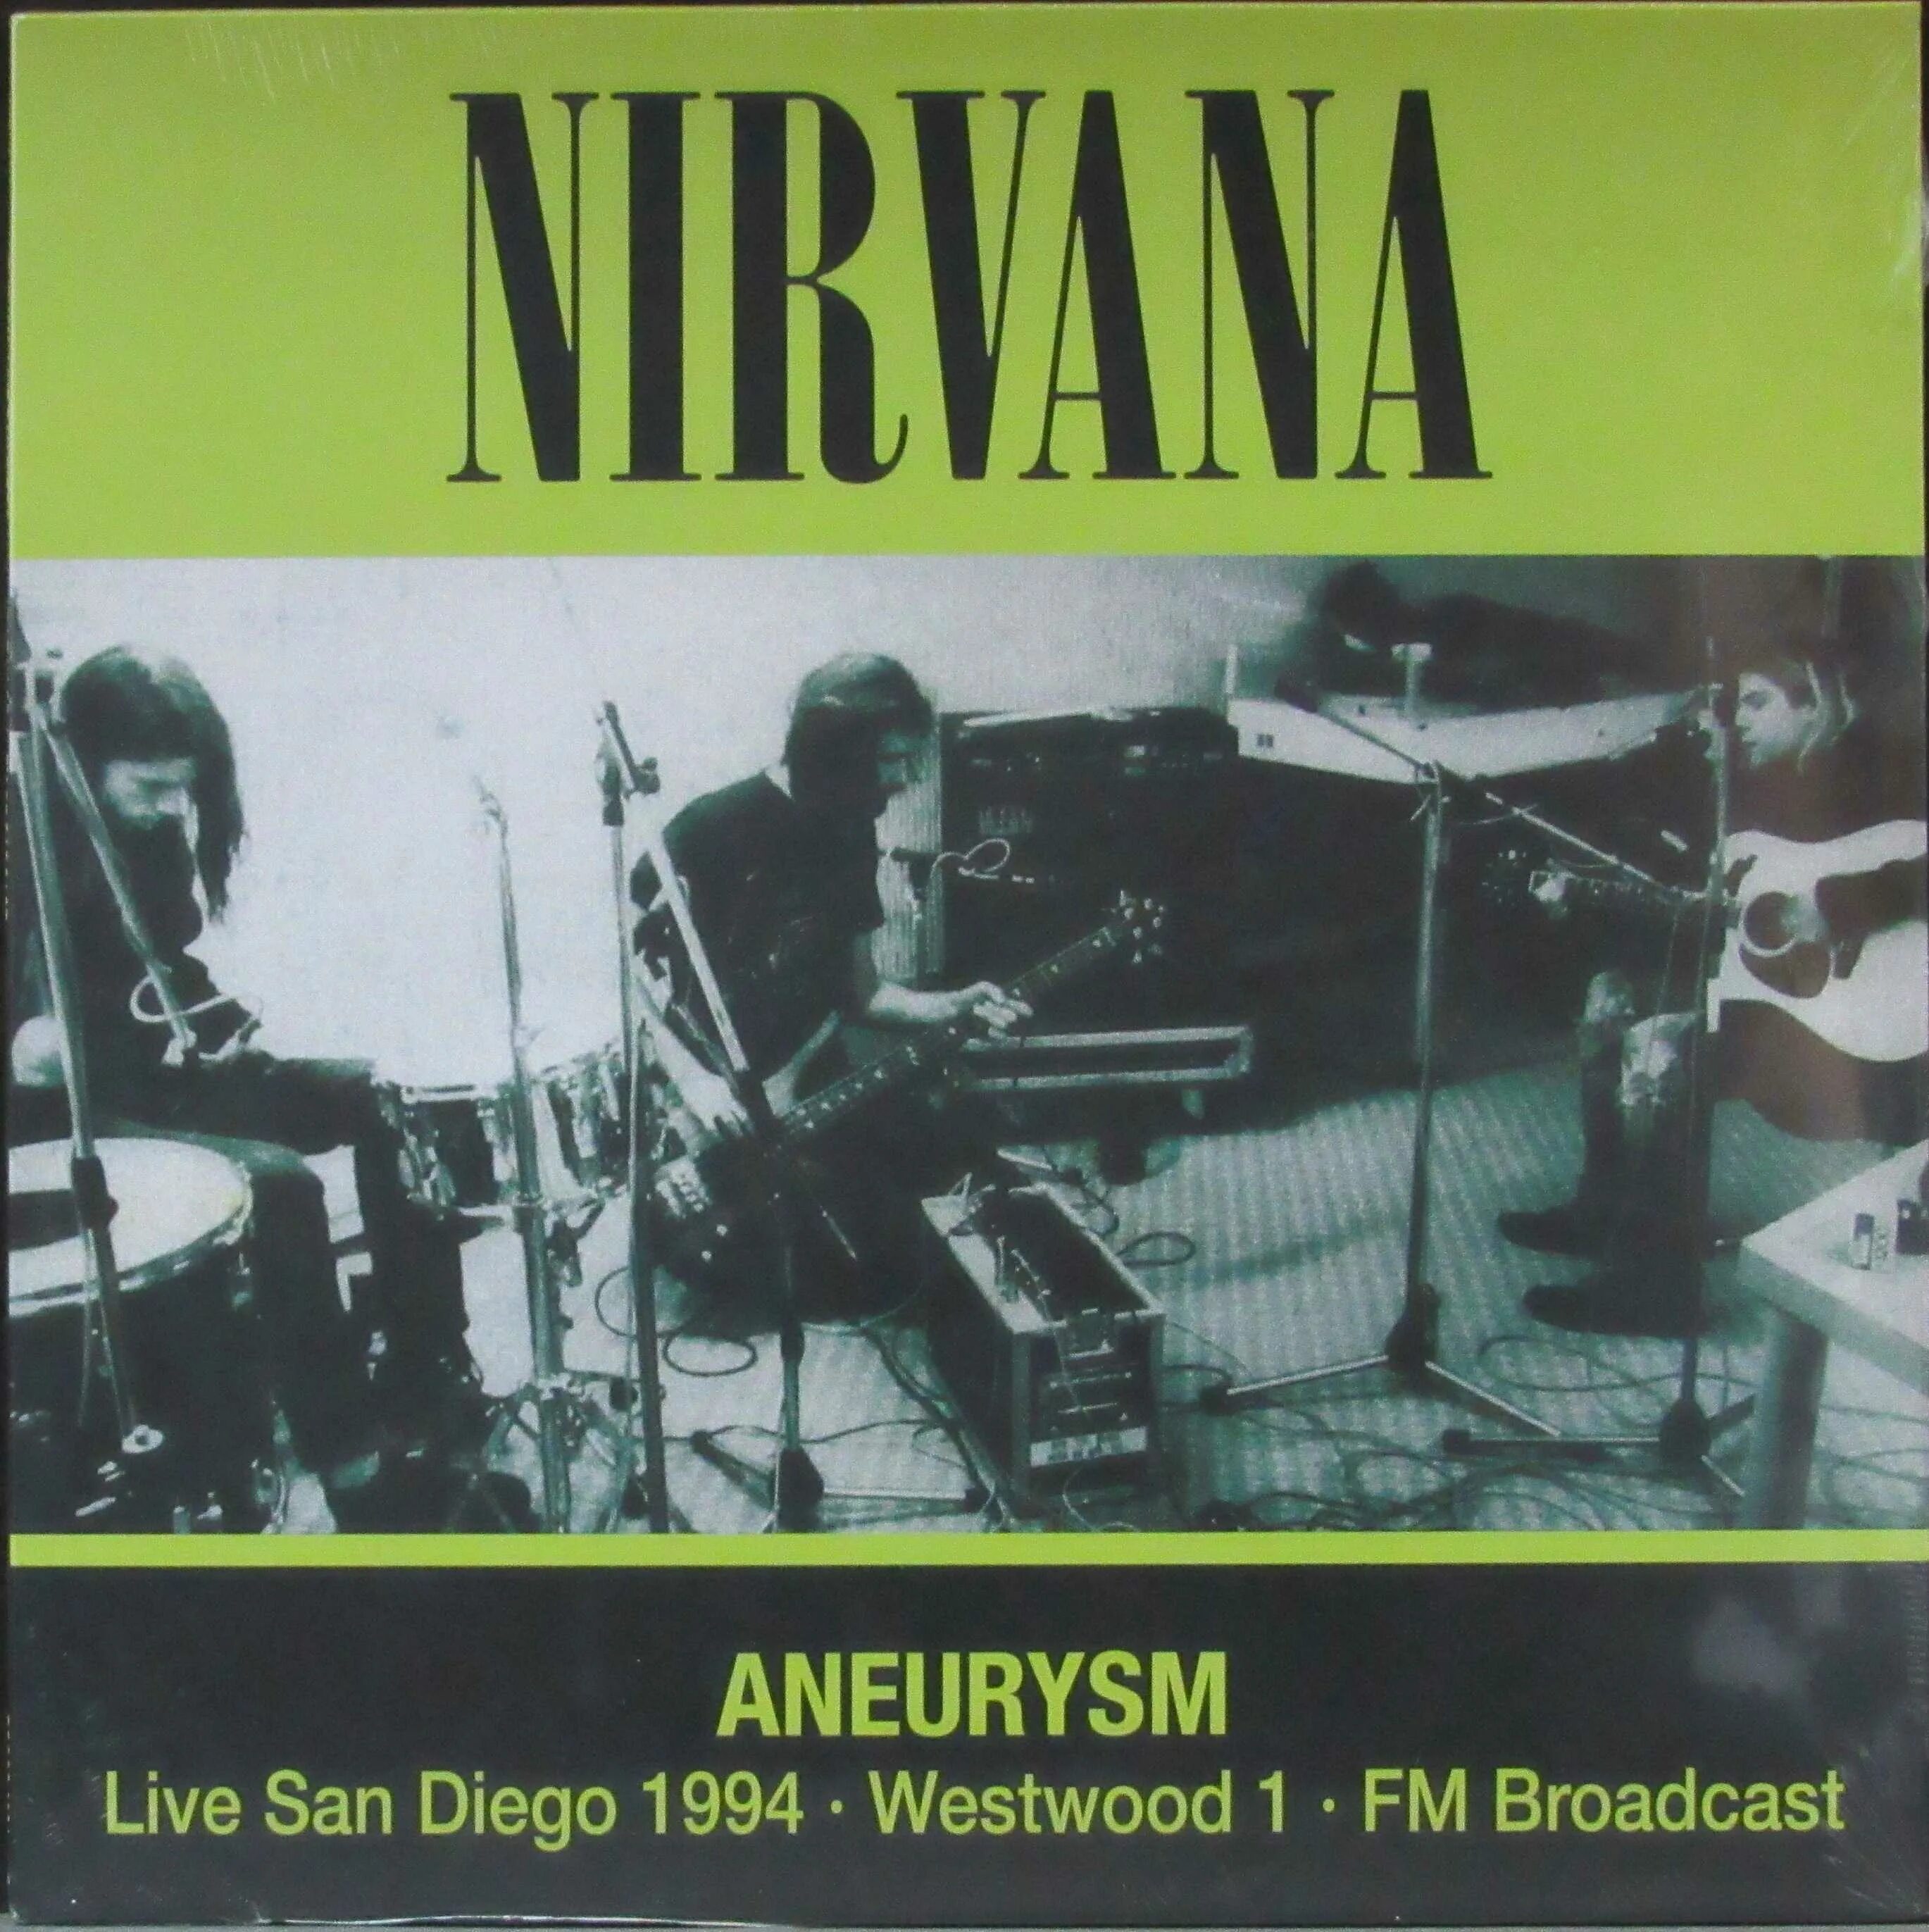 Nirvana 1994. Нирвана концерт 1994. Нирвана Aneurysm. Виниловая пластинка Нирвана. Nirvana aneurysm